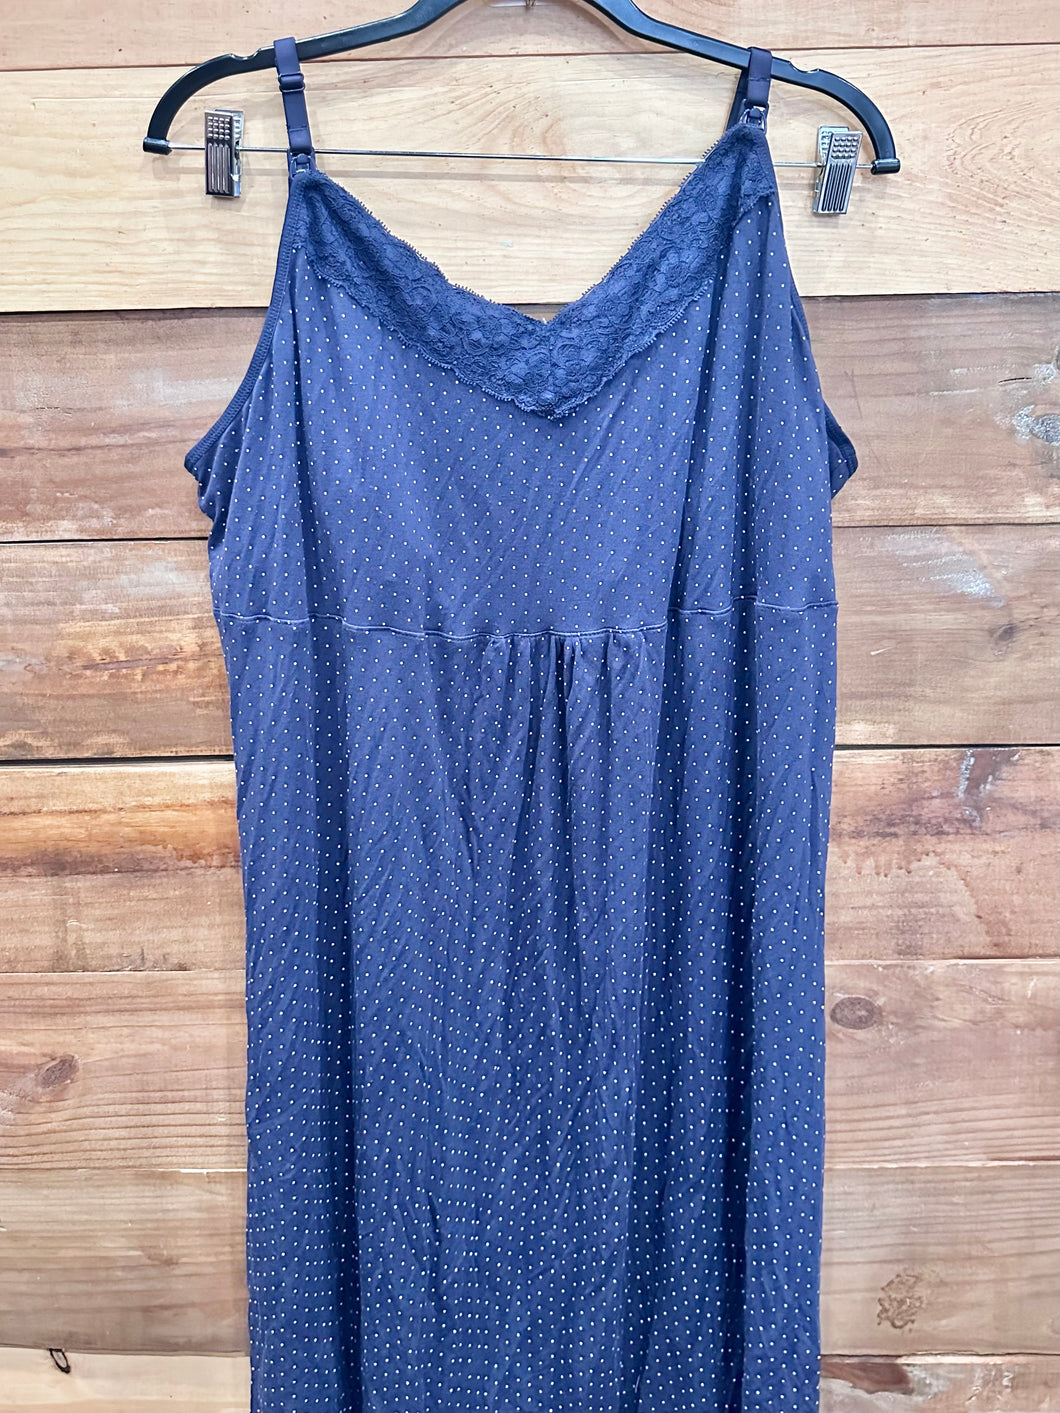 Gap Blue Polka Dot Nursing Nightgown Size XXL